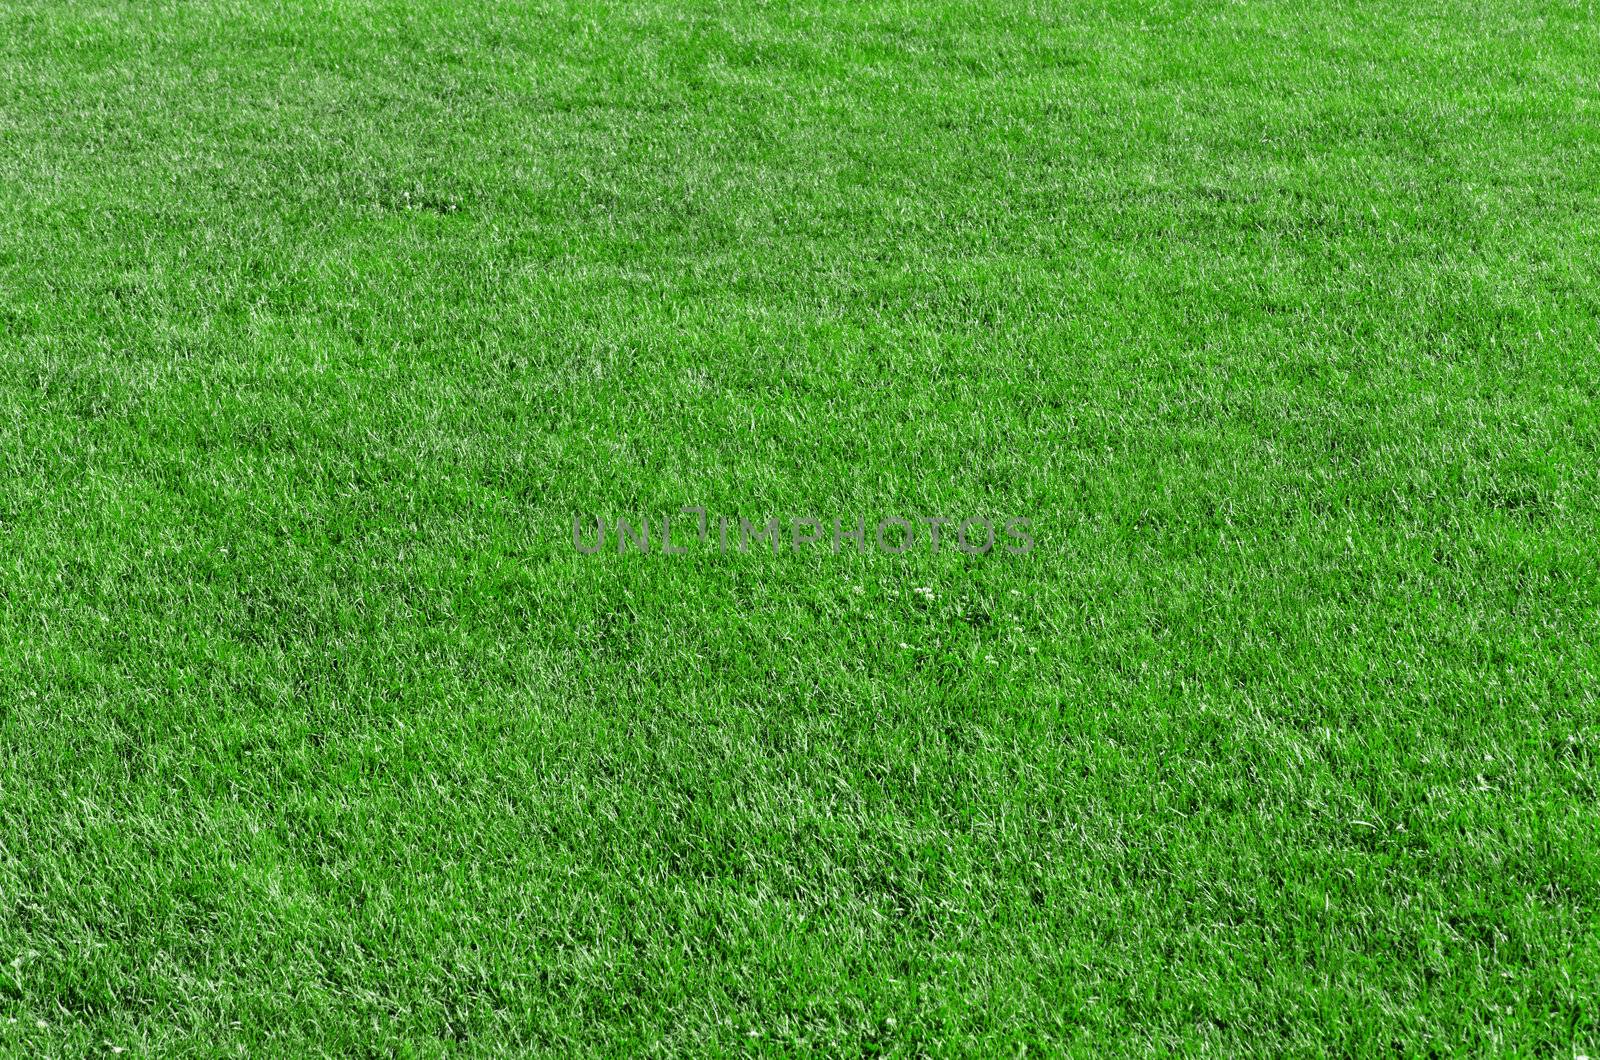 Beautiful green grass by milinz